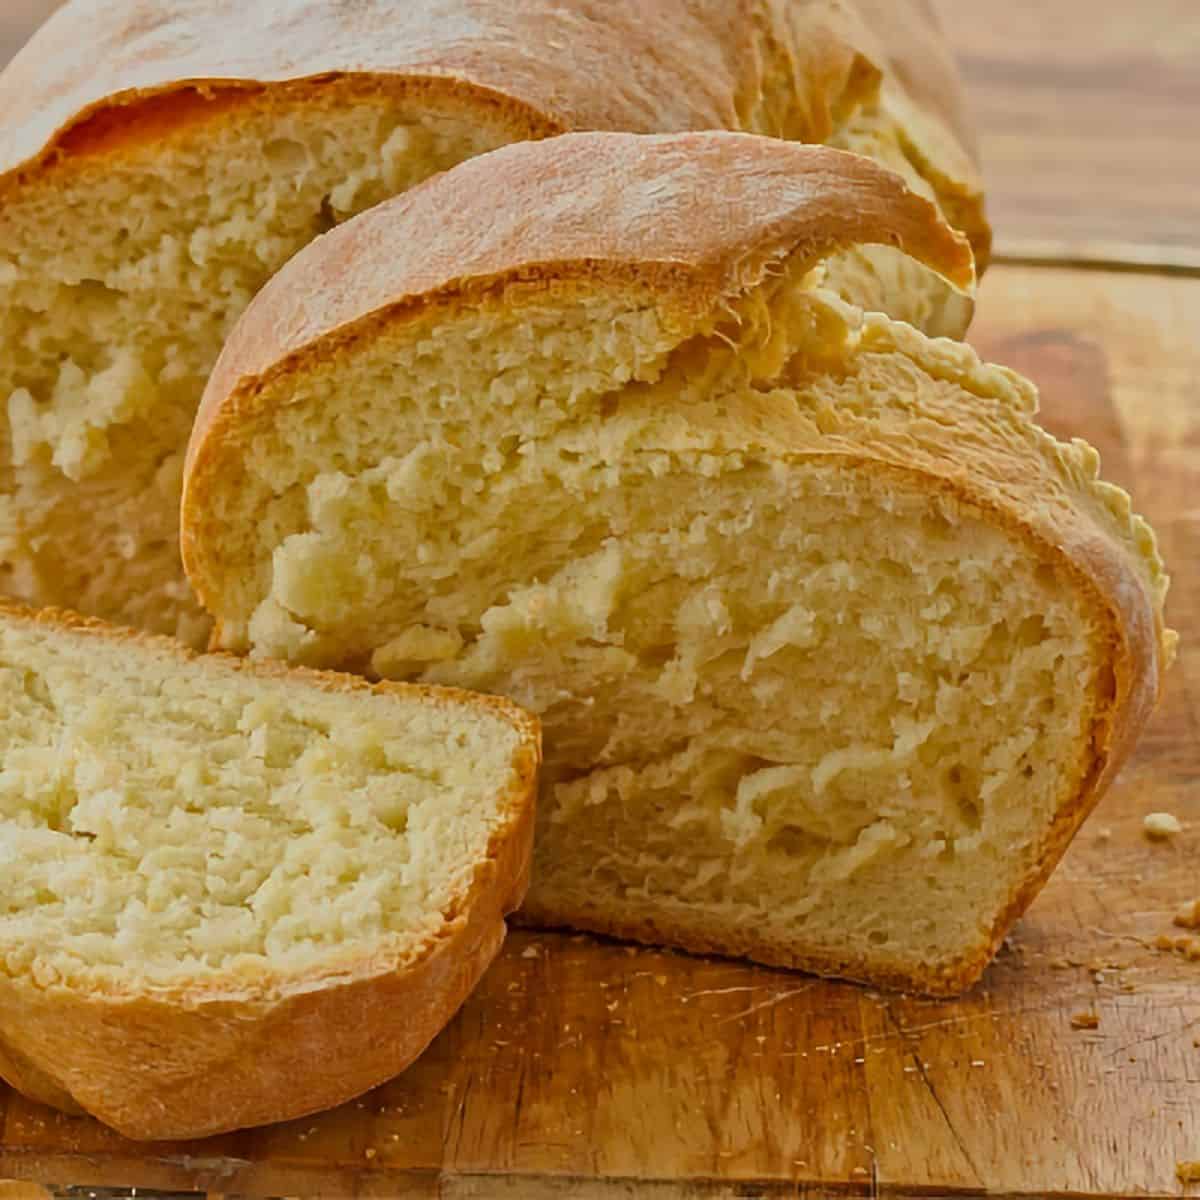 2. Air Fryer Bread - air fryer bread recipes